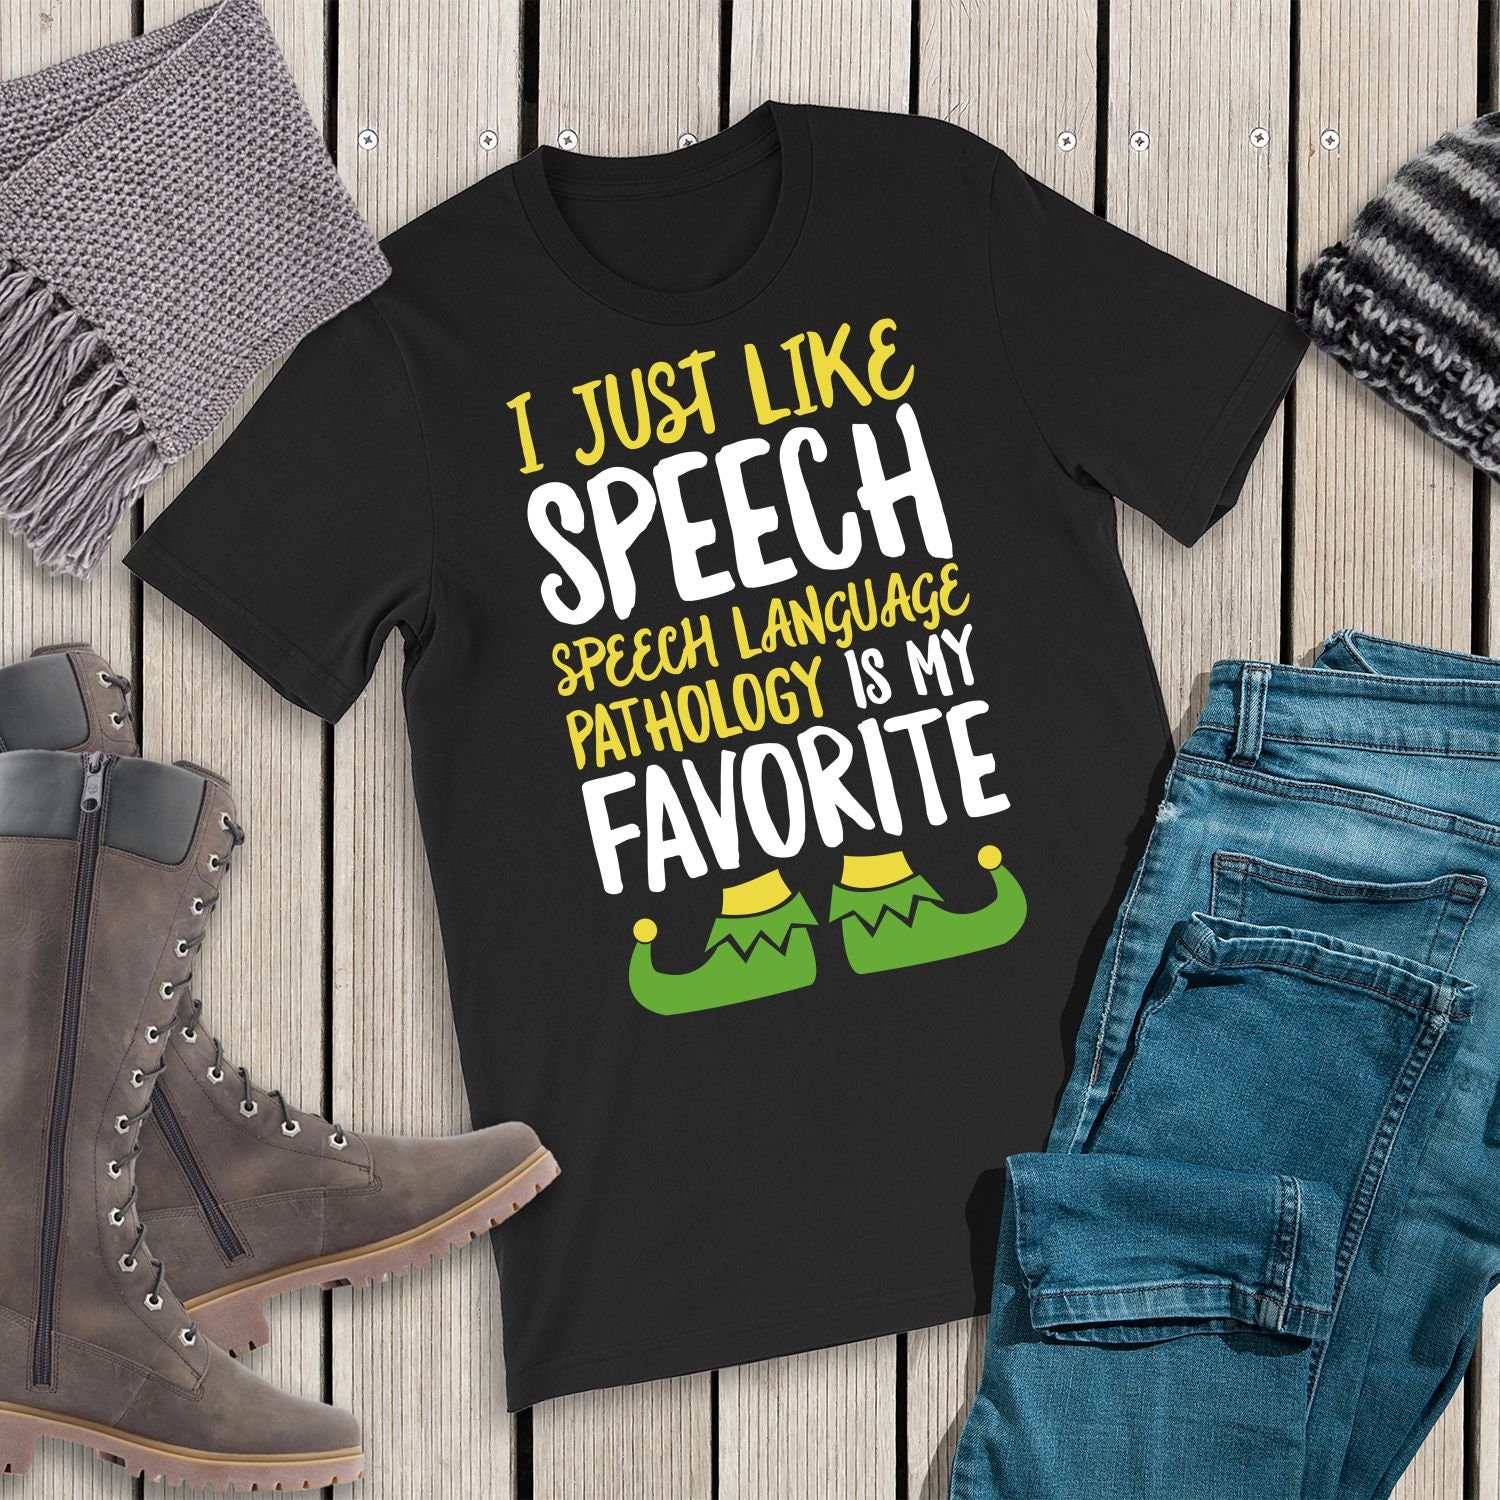 Speech Elf Tumbler - I Just Like Speech, Speech Is My Favorite